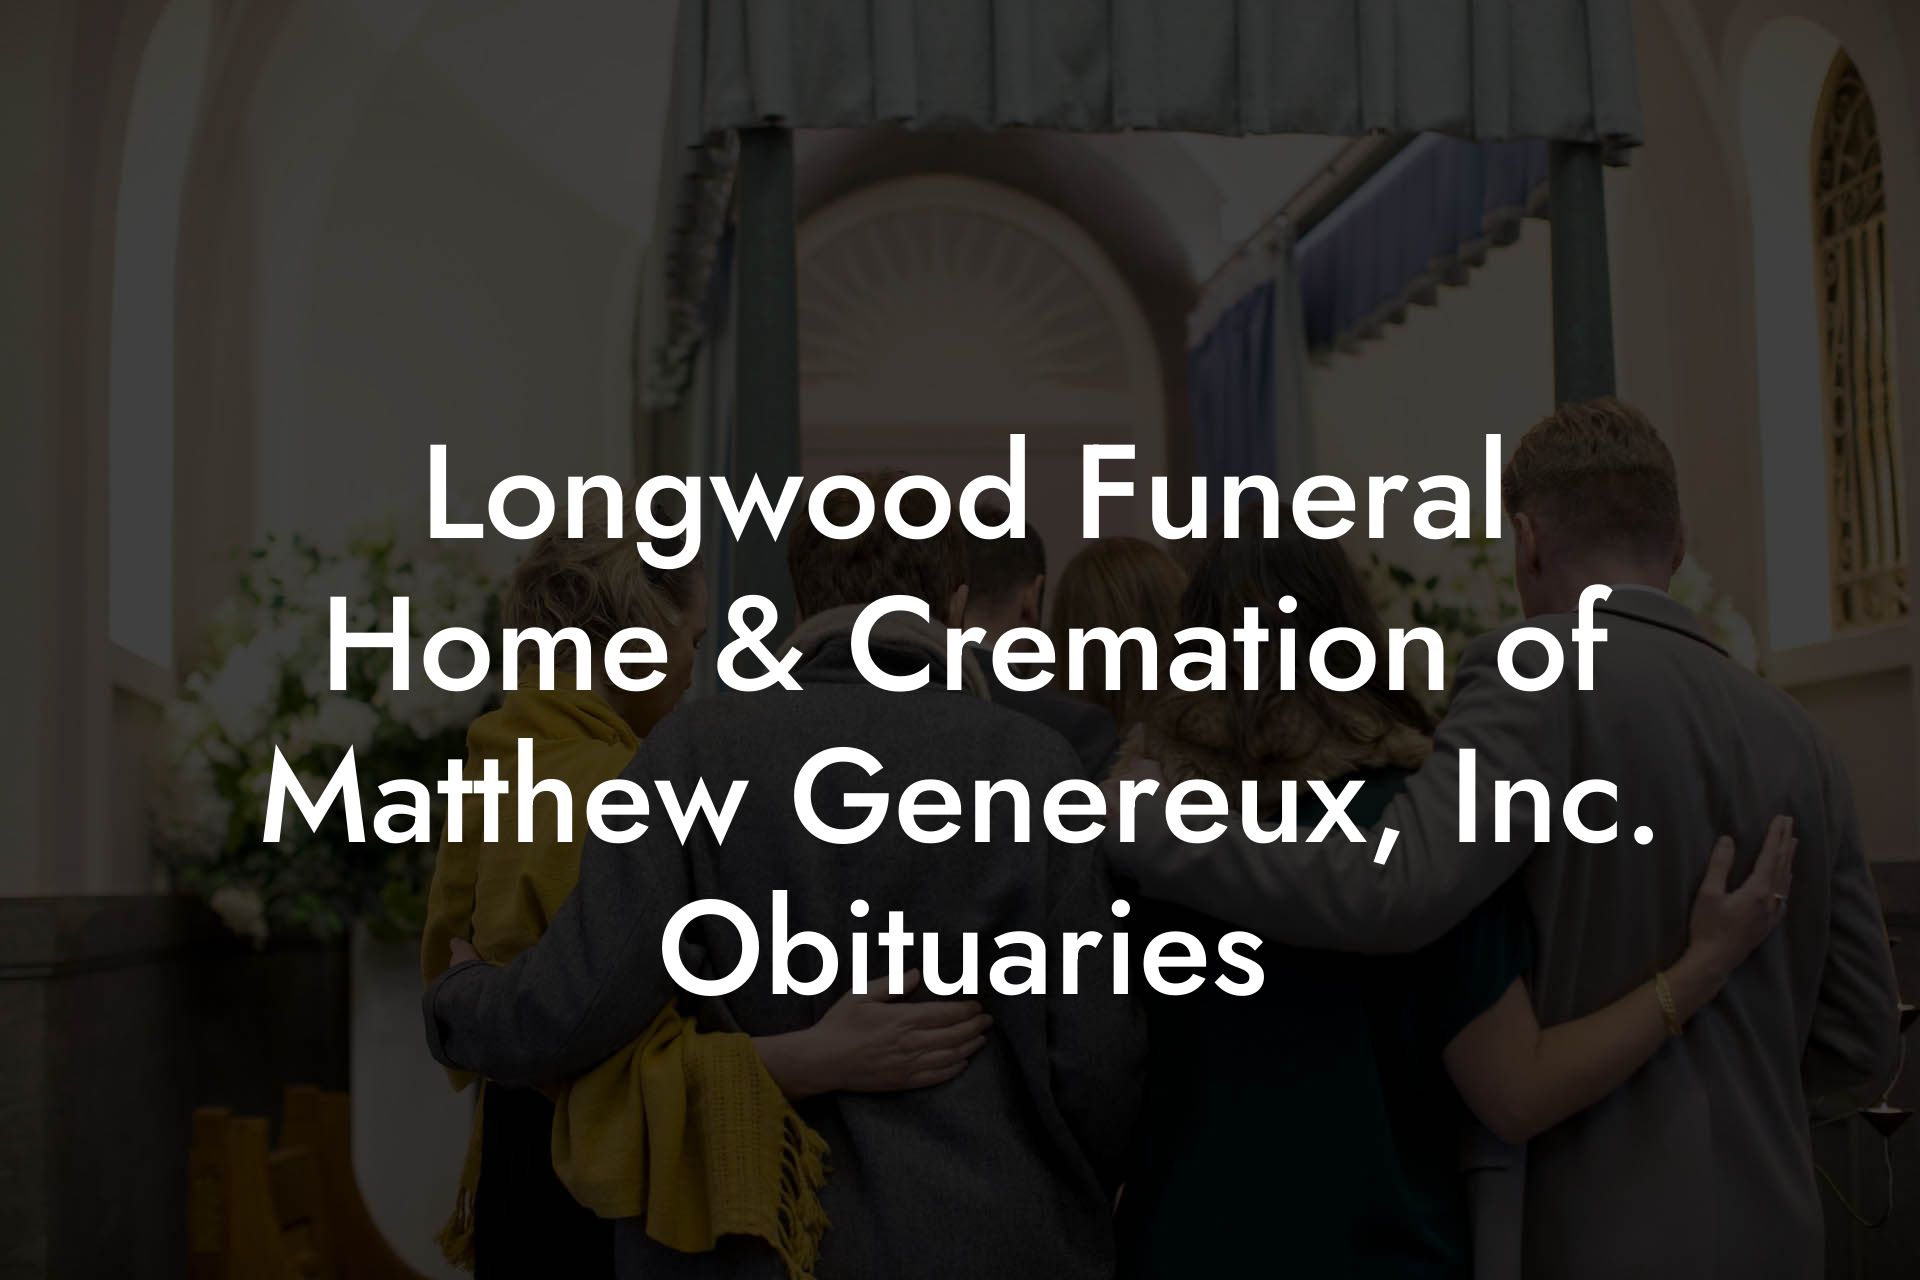 Longwood Funeral Home & Cremation of Matthew Genereux, Inc. Obituaries